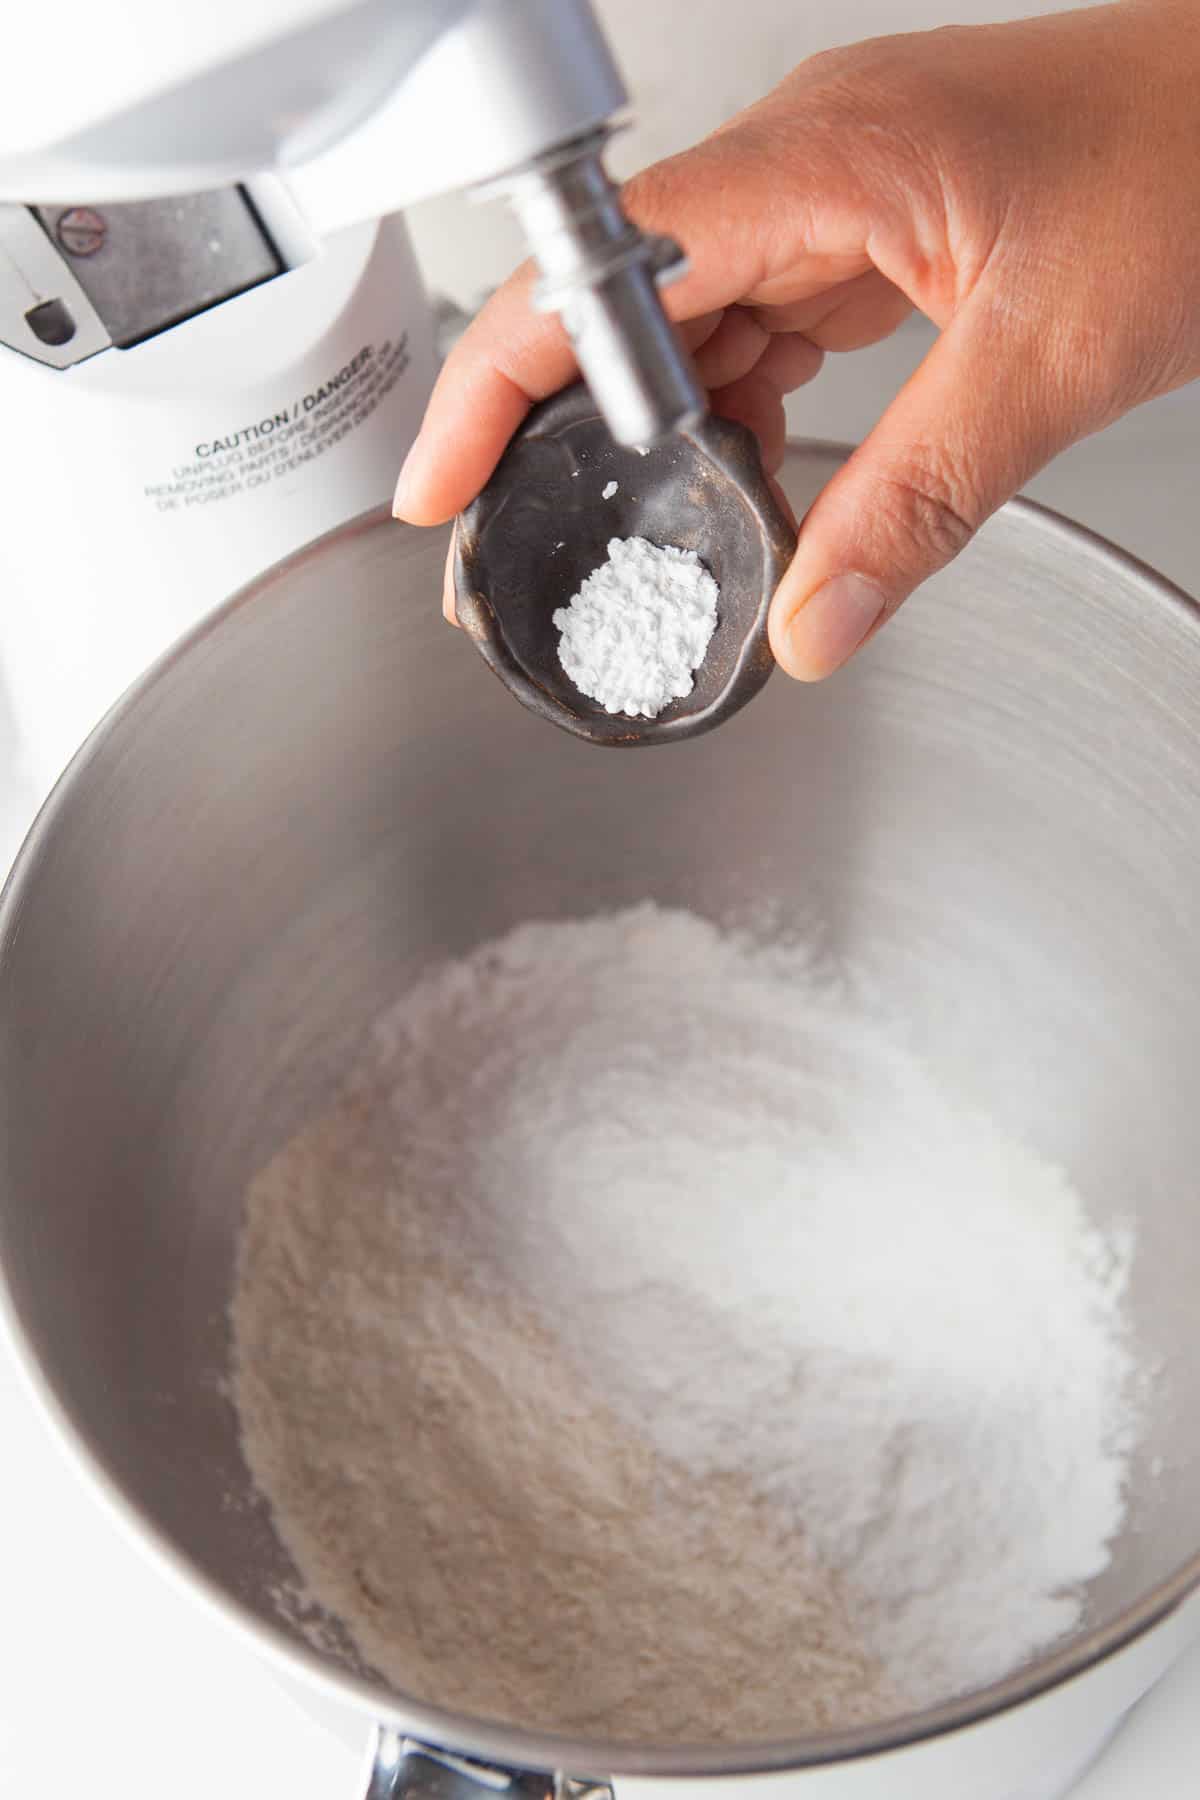 A person preparing dulce de leche cookies by pouring flour into a mixing bowl.